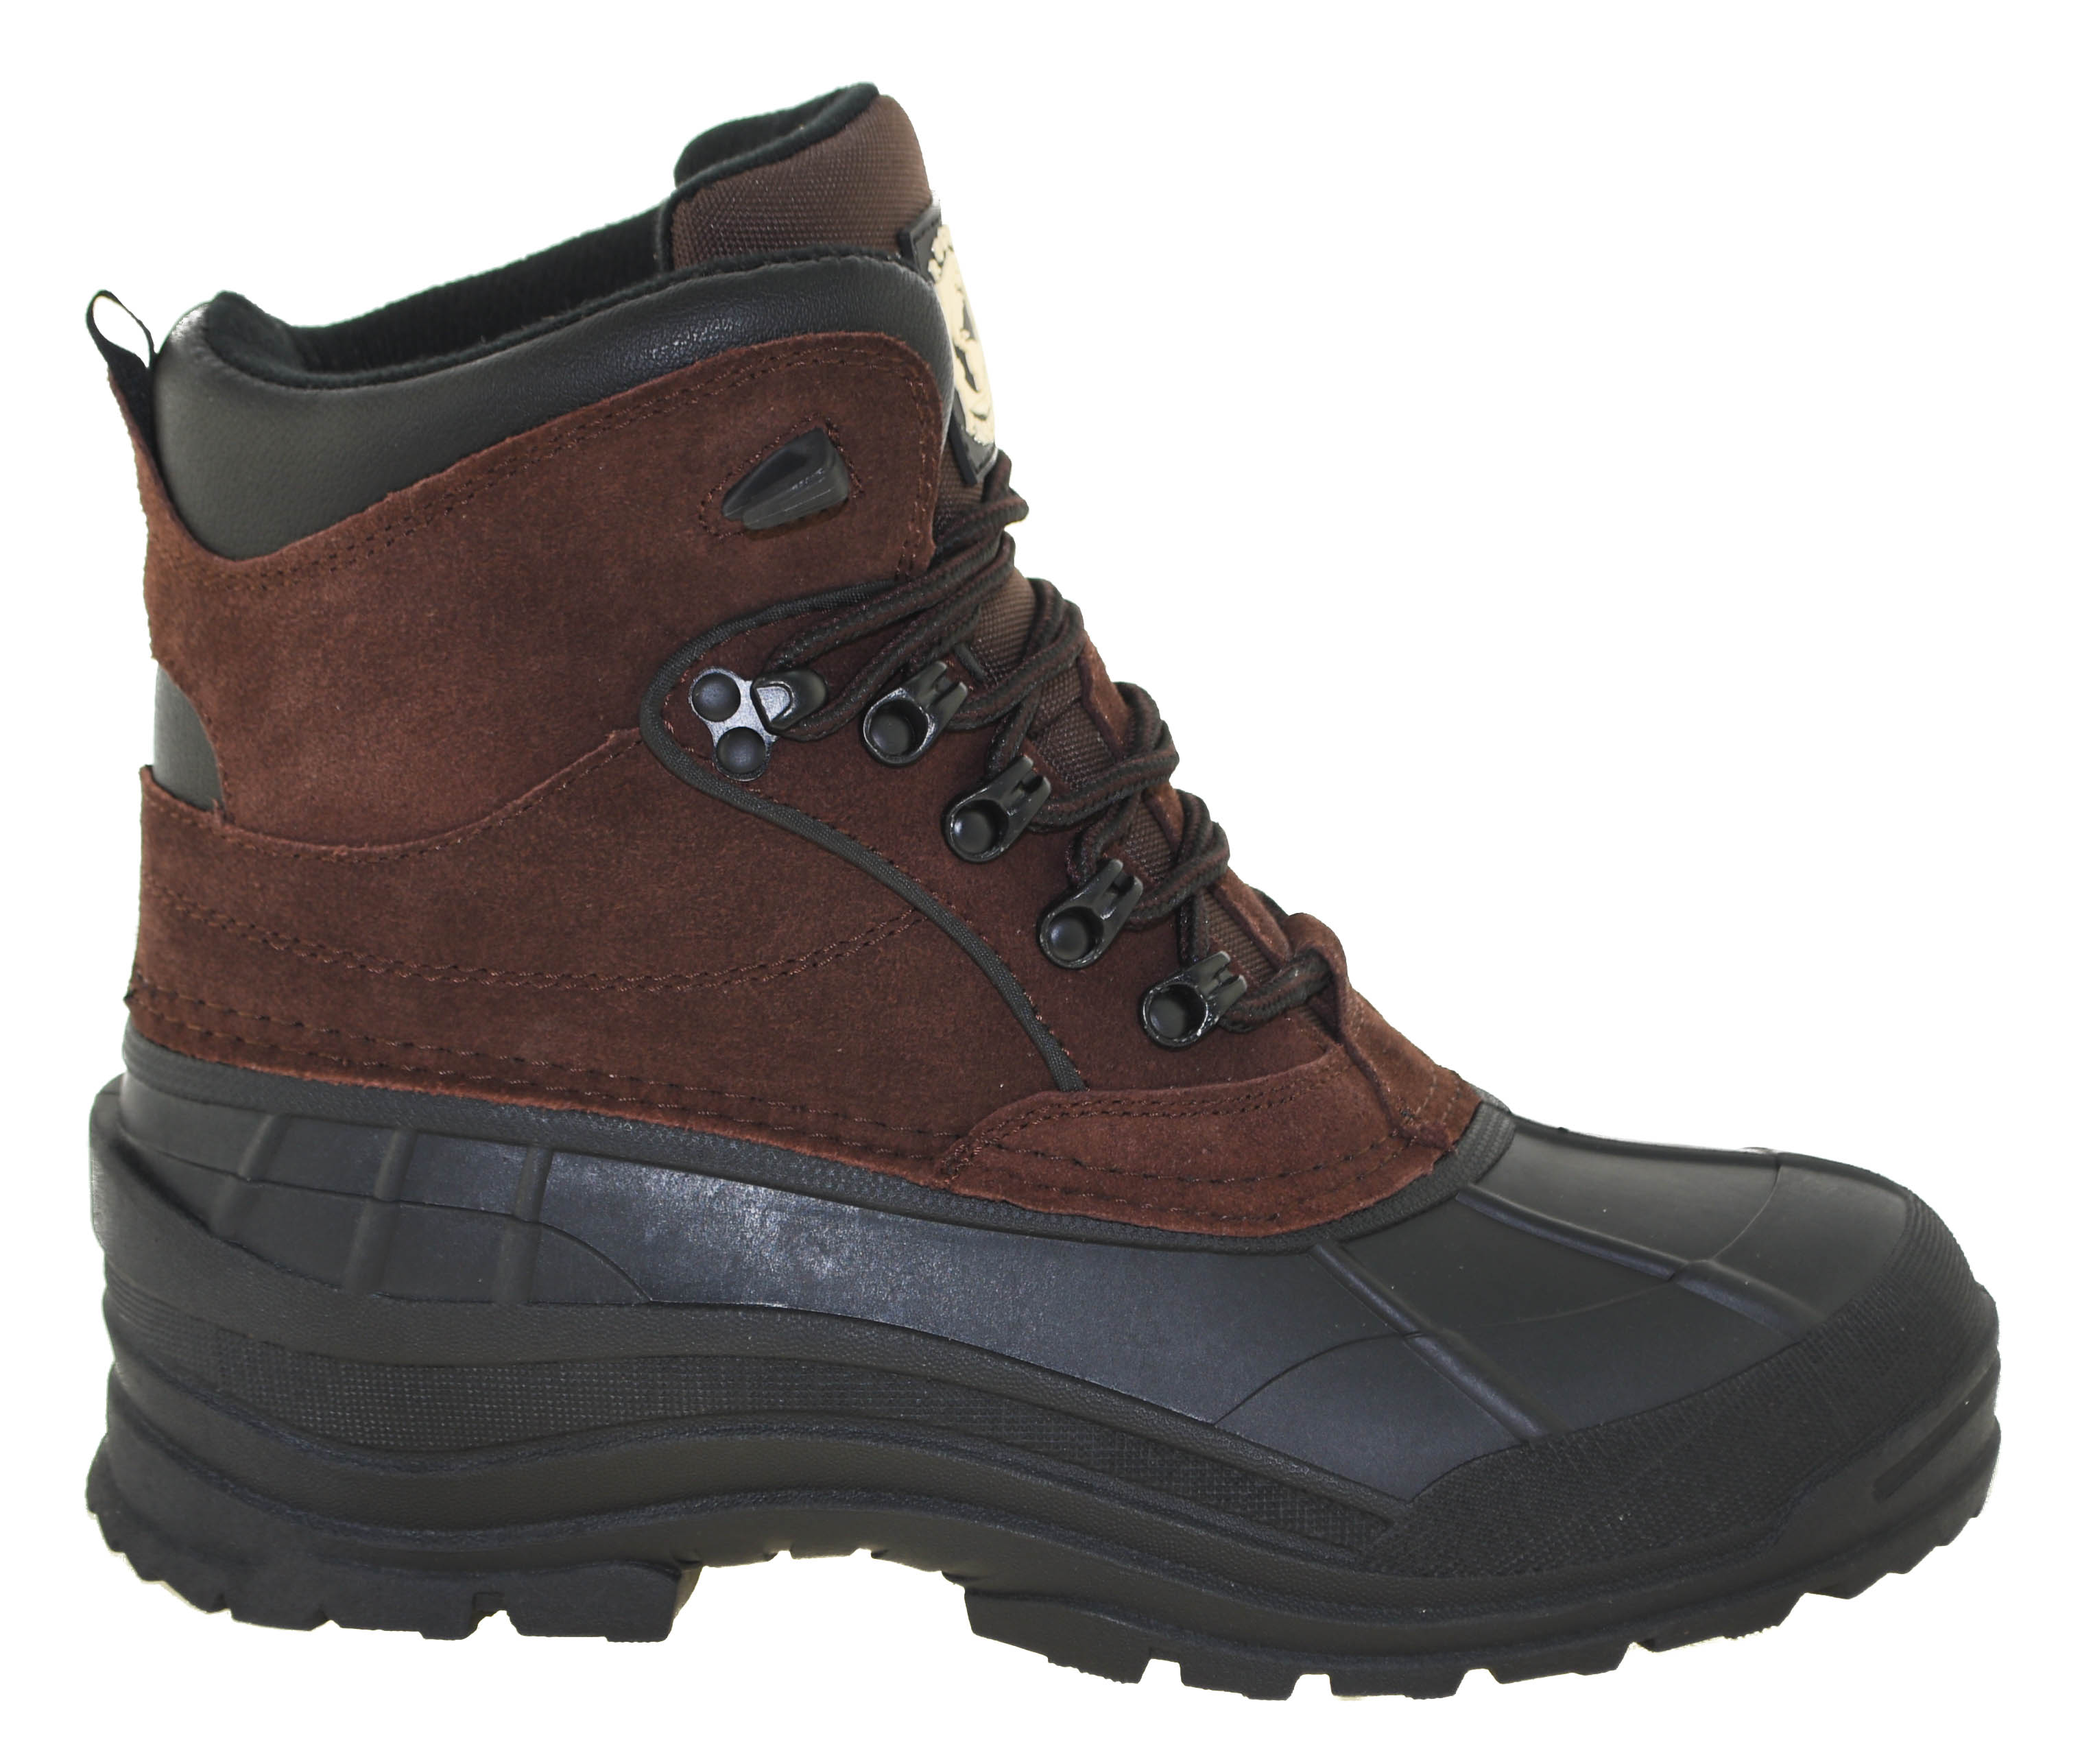 Rugged Exposure Men's Mammoth II Waterproof Winter Boots Dark Brown | eBay